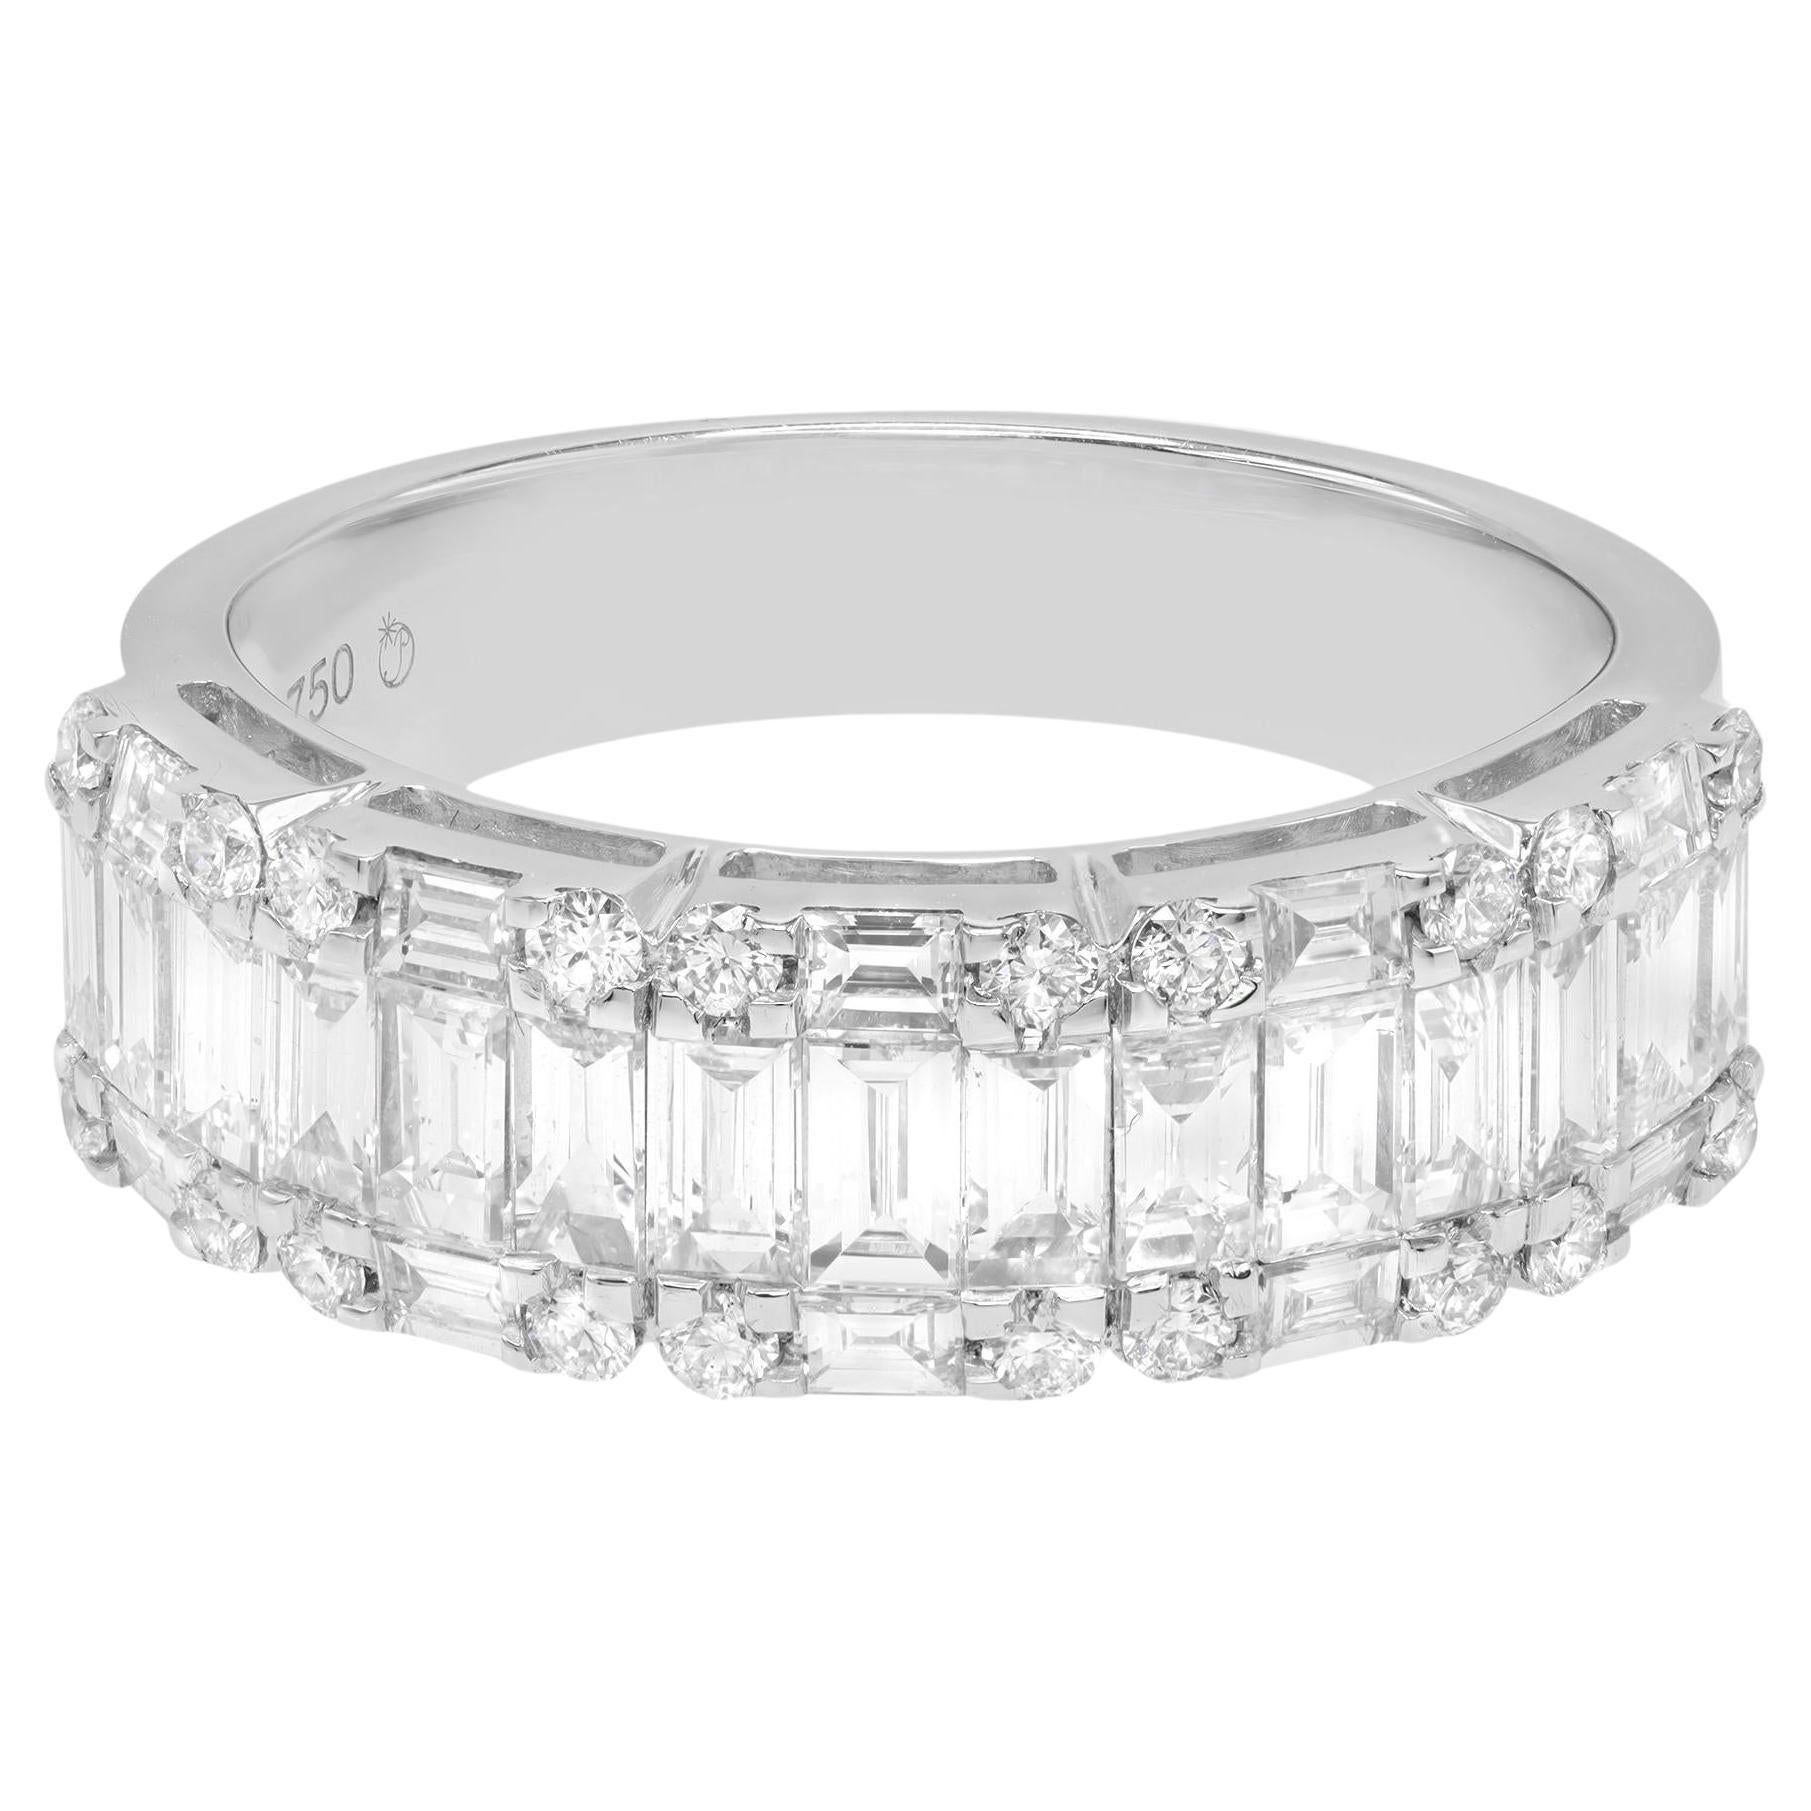 Rachel Koen Wide Diamond Wedding Band Ring 18K White Gold 1.90Cttw